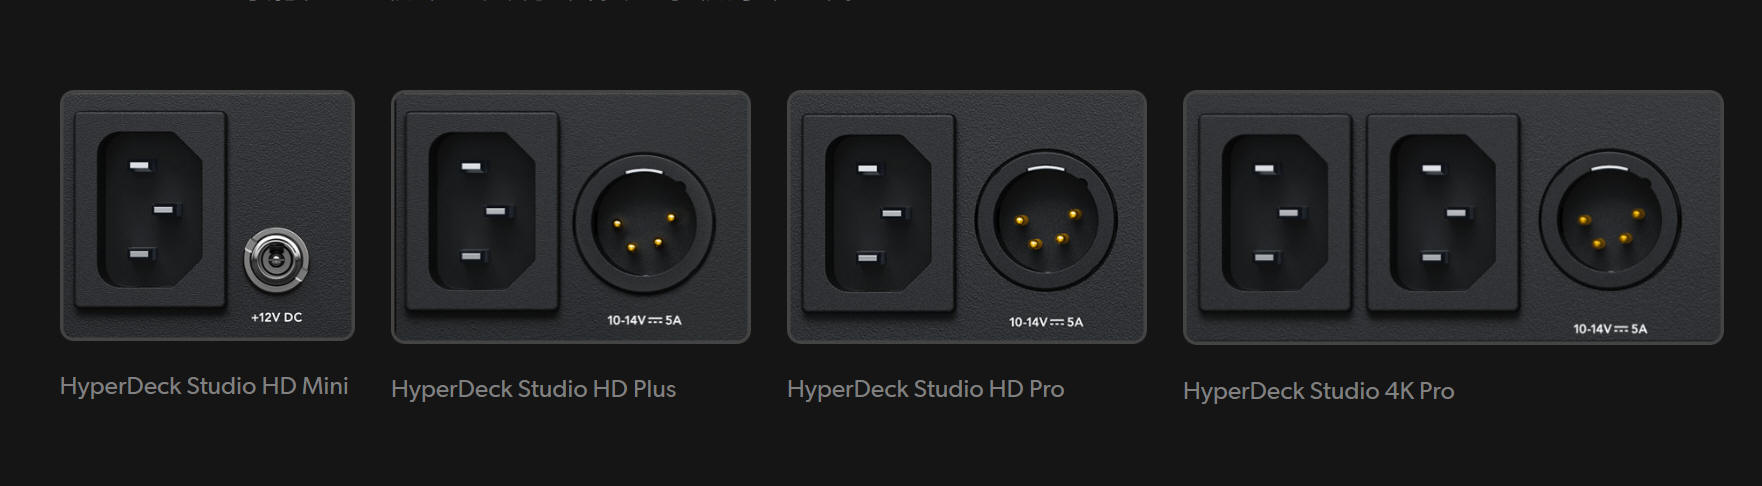  HyperDeck Studio HD Mini 